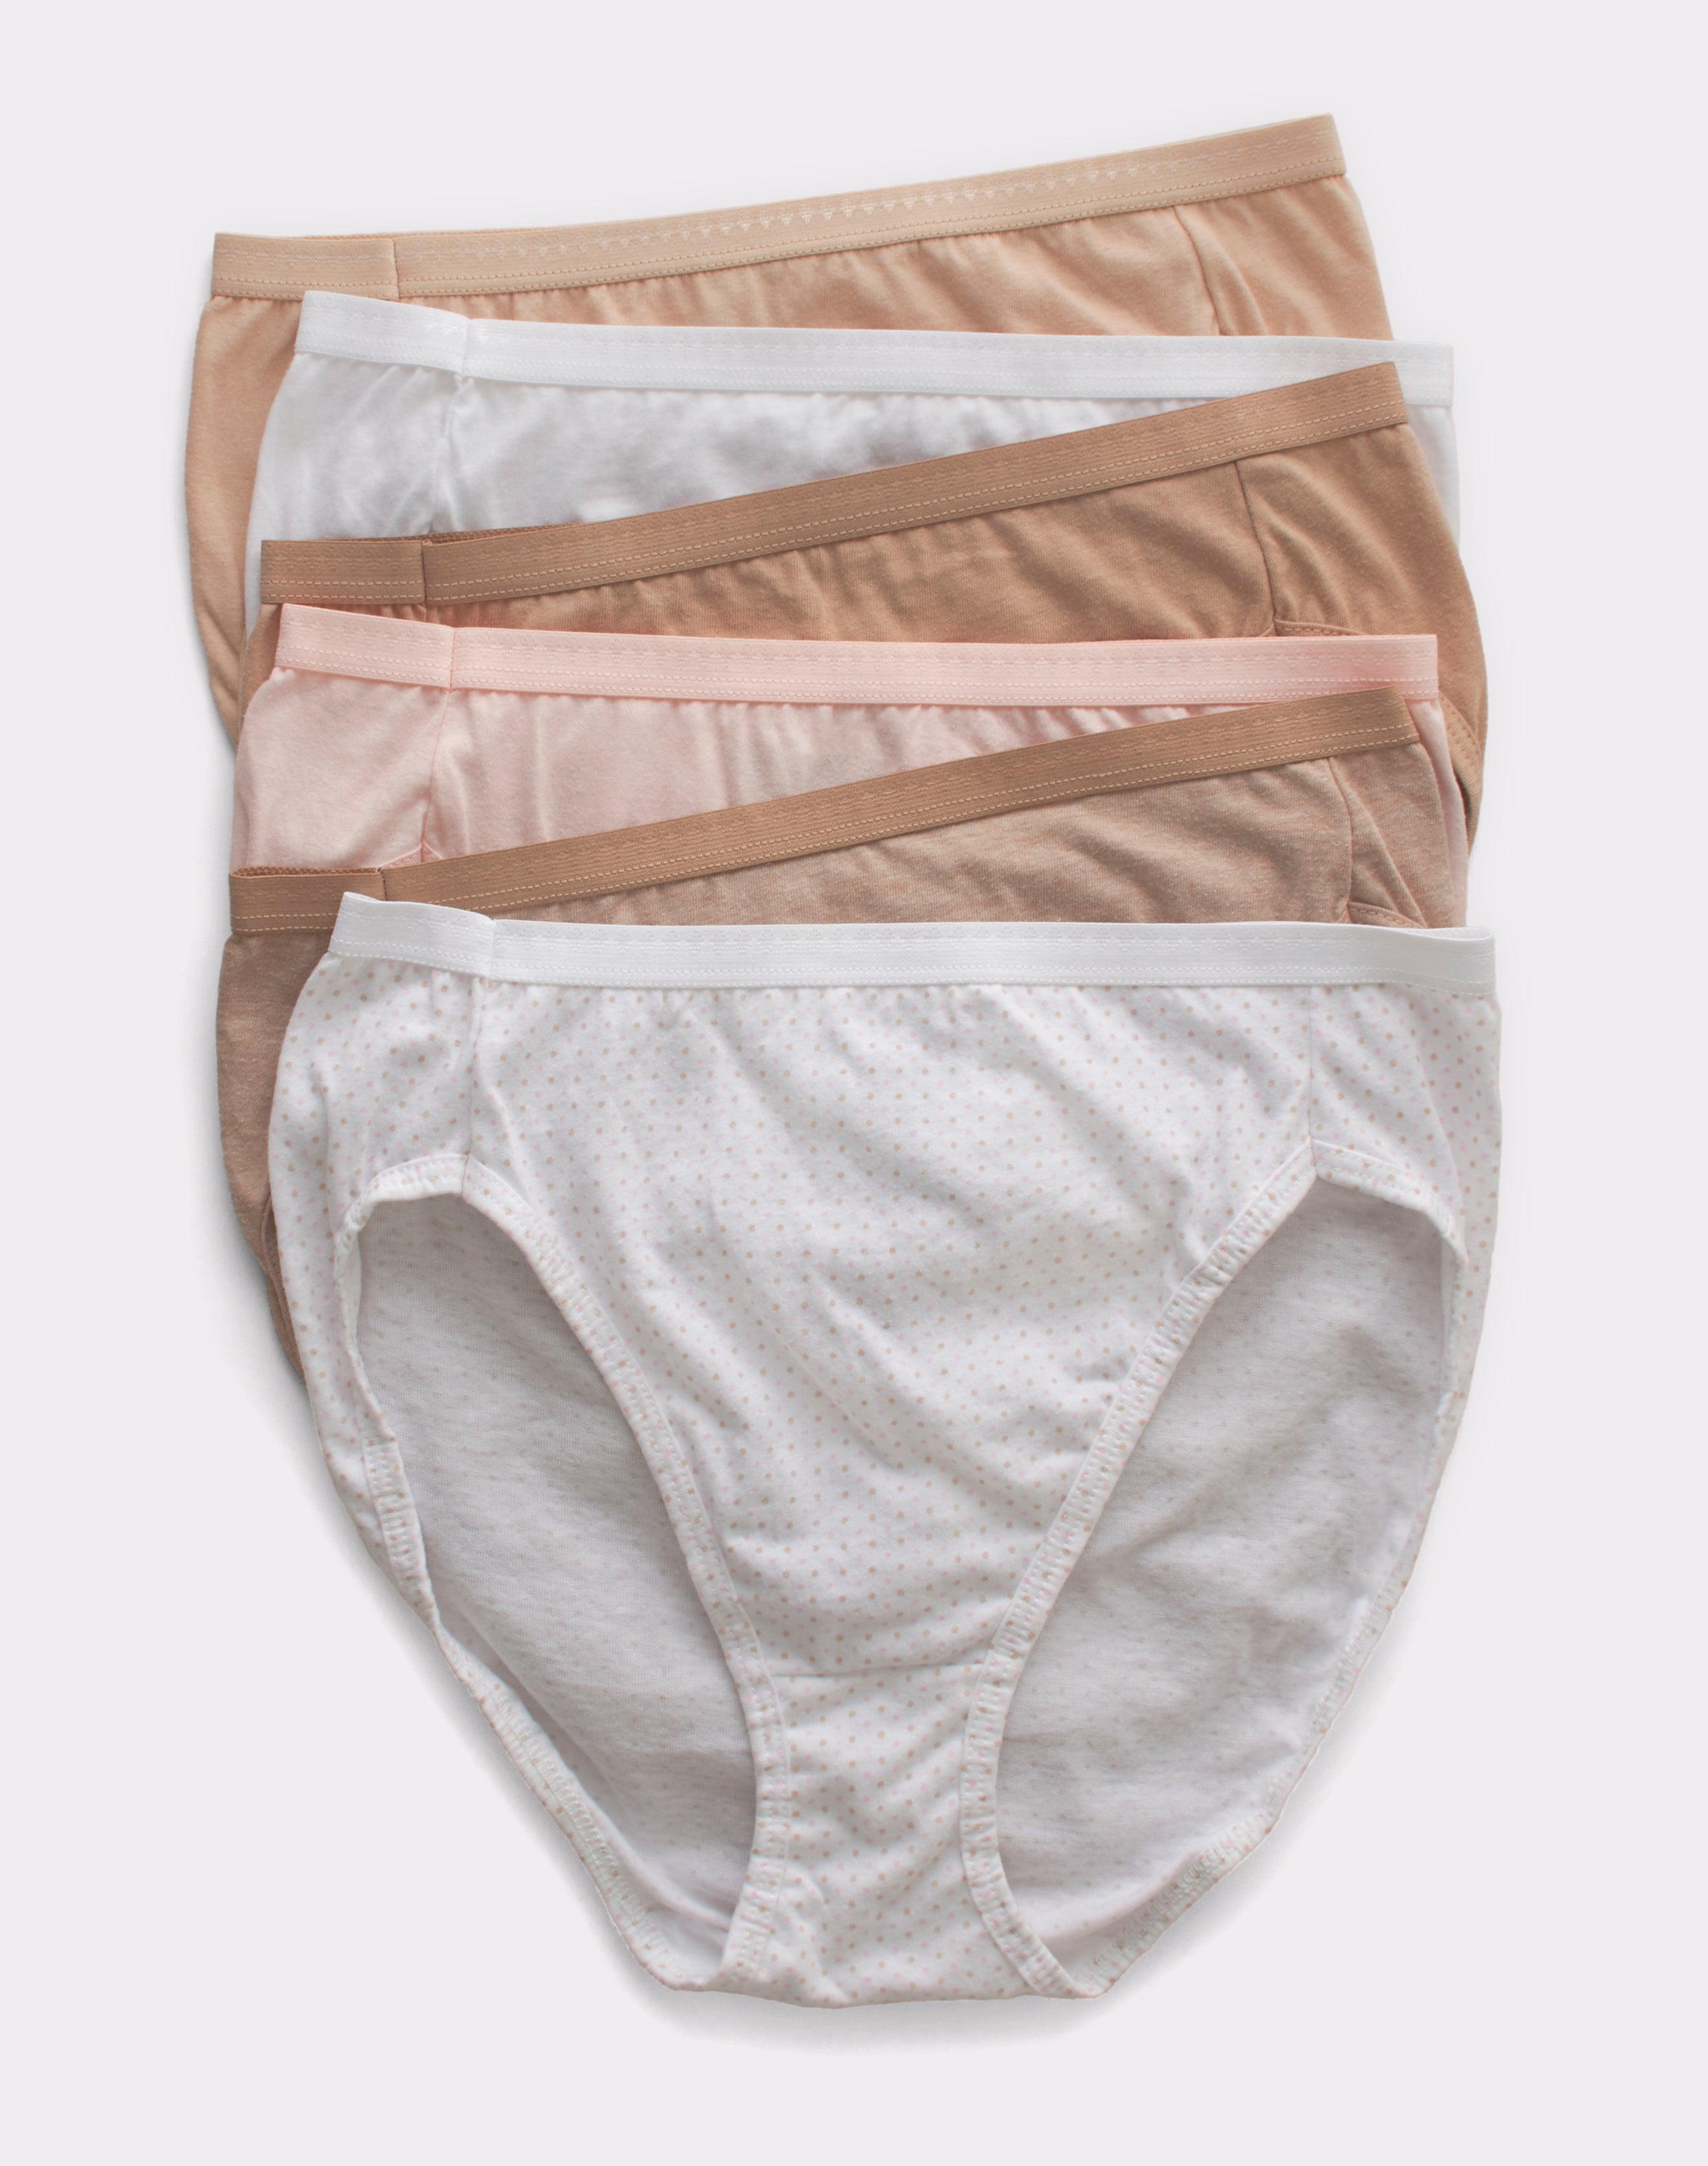 Buy Hanes Women's Ultimates Brief Panties White, 8 (Pack of 4) at